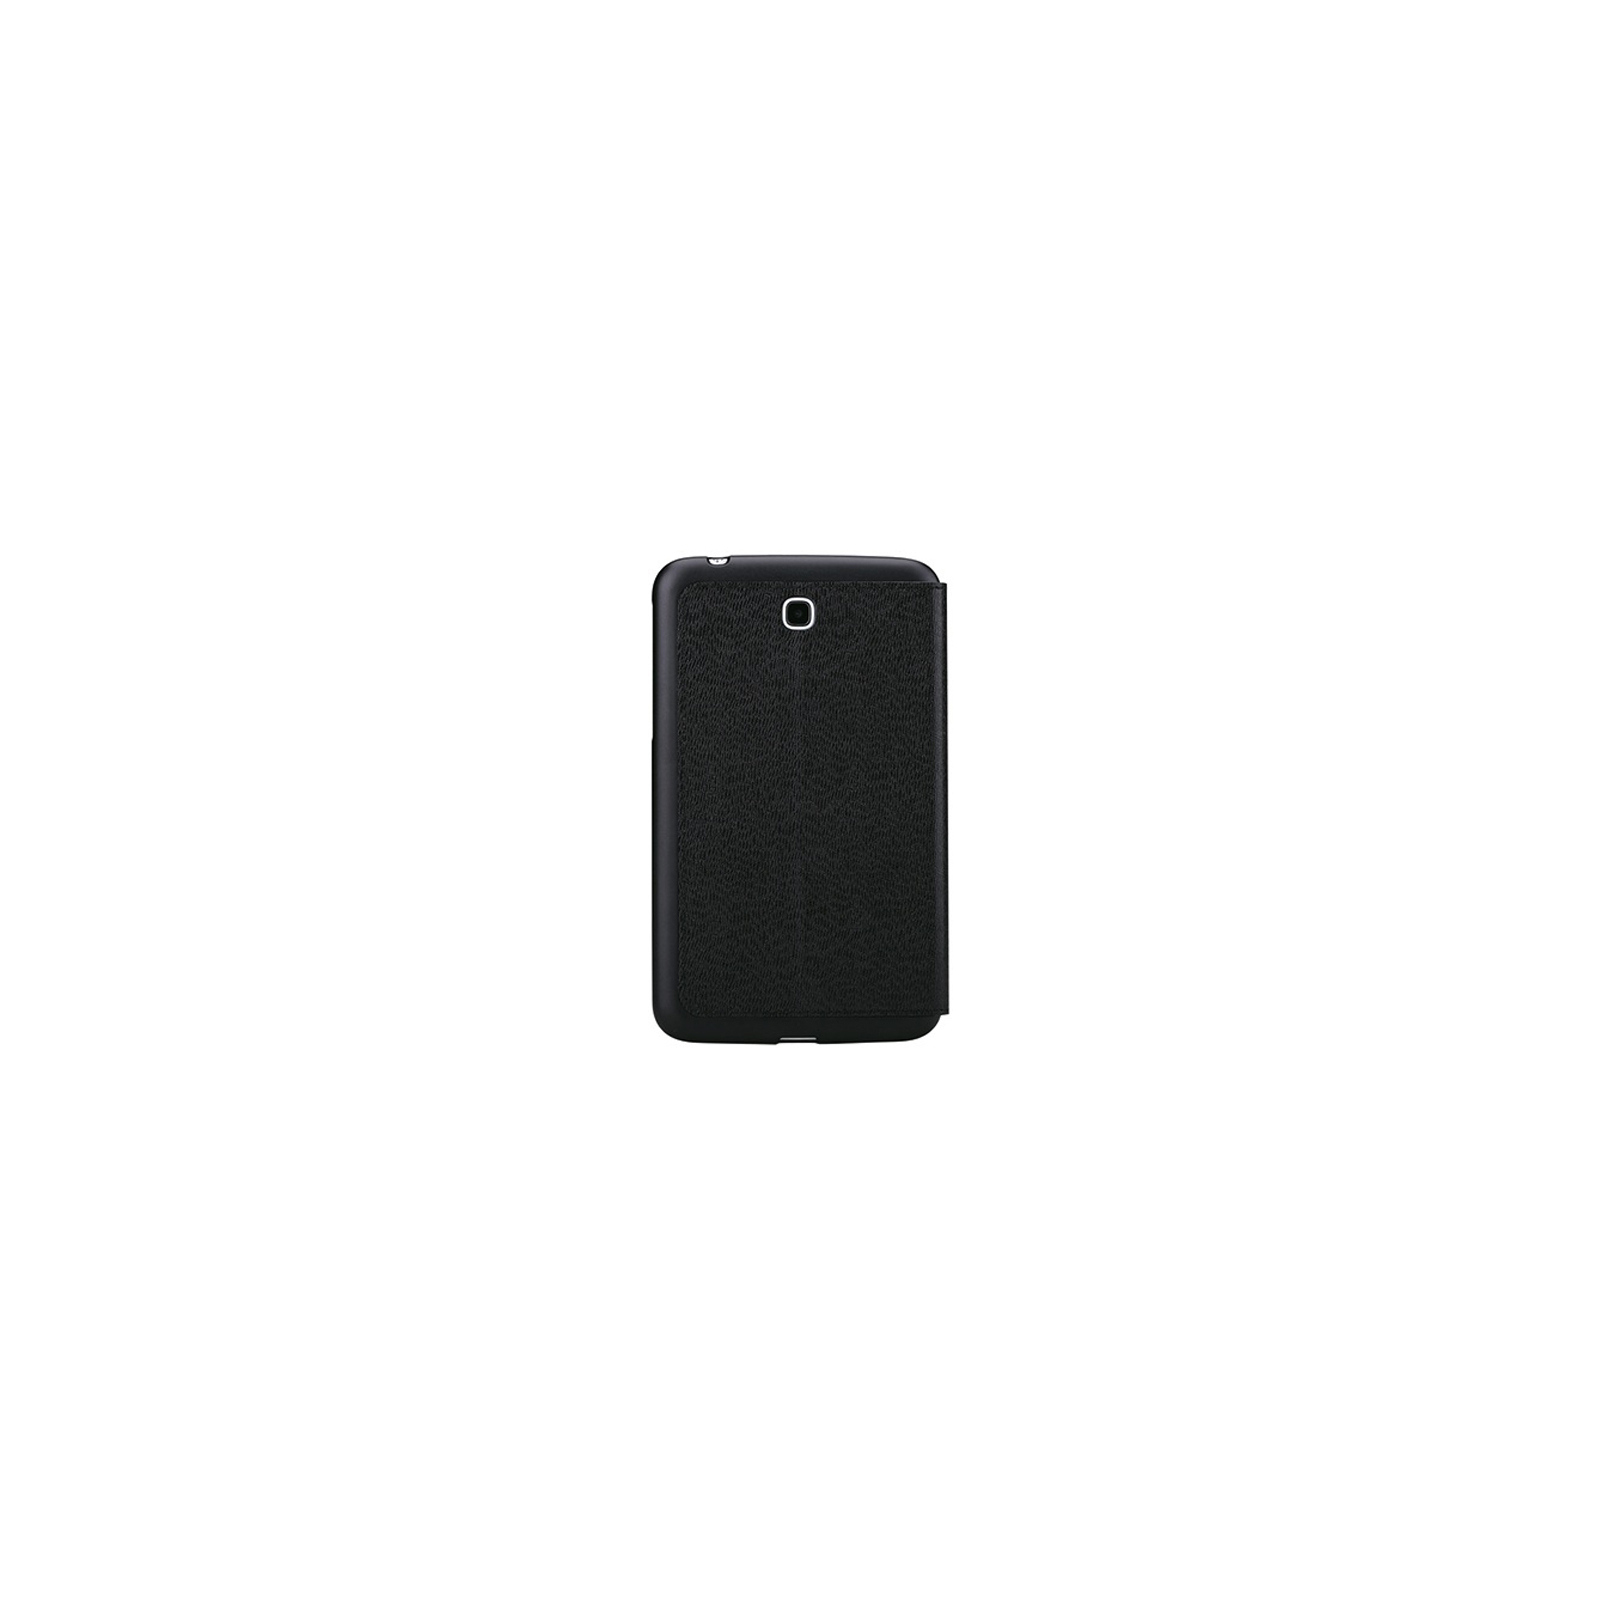 Чехол для планшета Rock Samsung Galaxy Tab3 7.0 T2100 Excel series black (T2100-50246) изображение 2